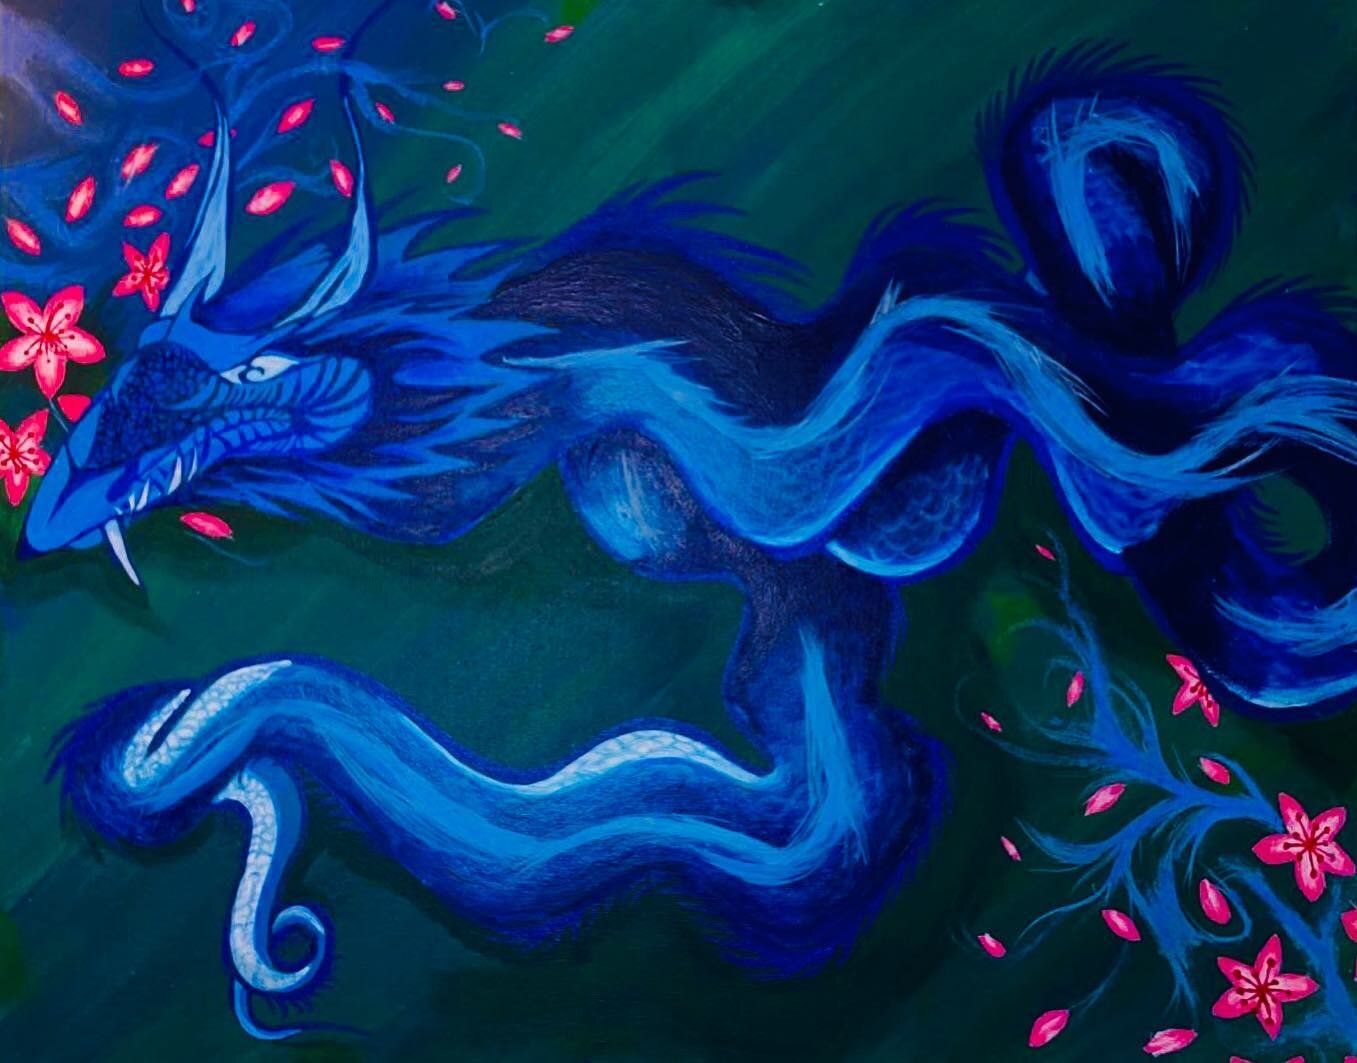 &ldquo;The Dragon Within&rdquo; 

#artistsoninstagra #artgram